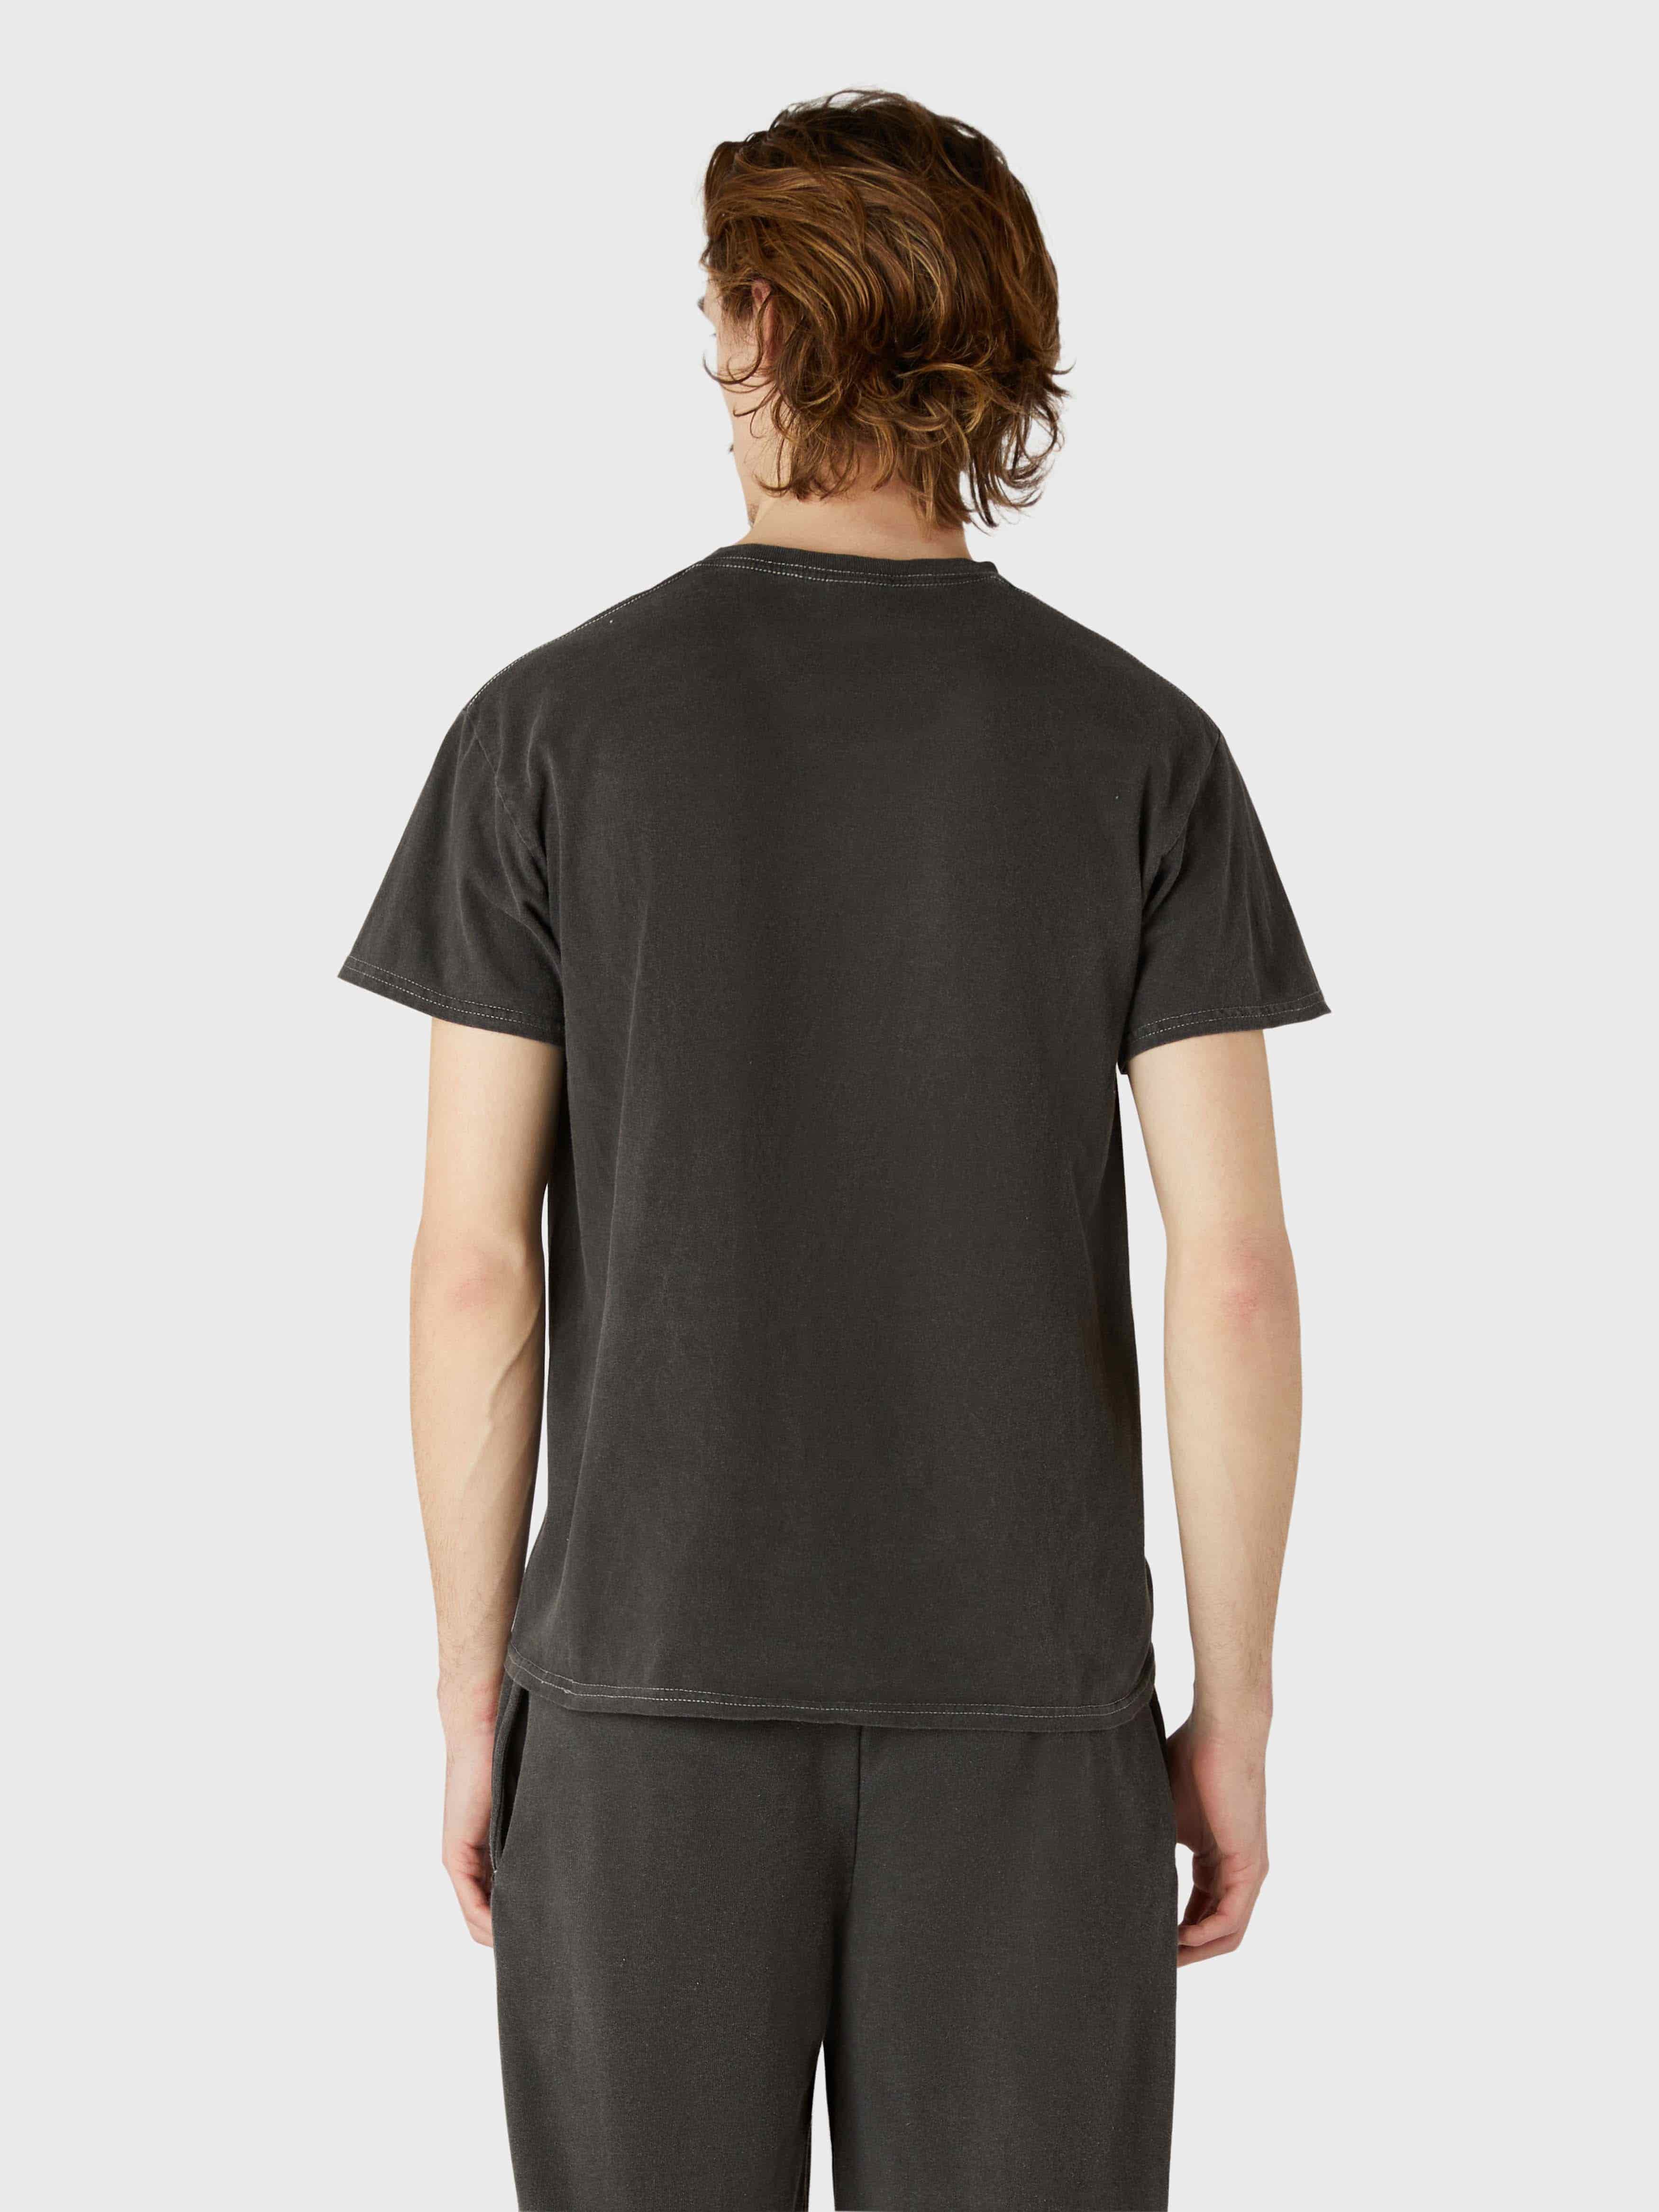 Classic Speedway Short Sleeve T-Shirt - Black Wash